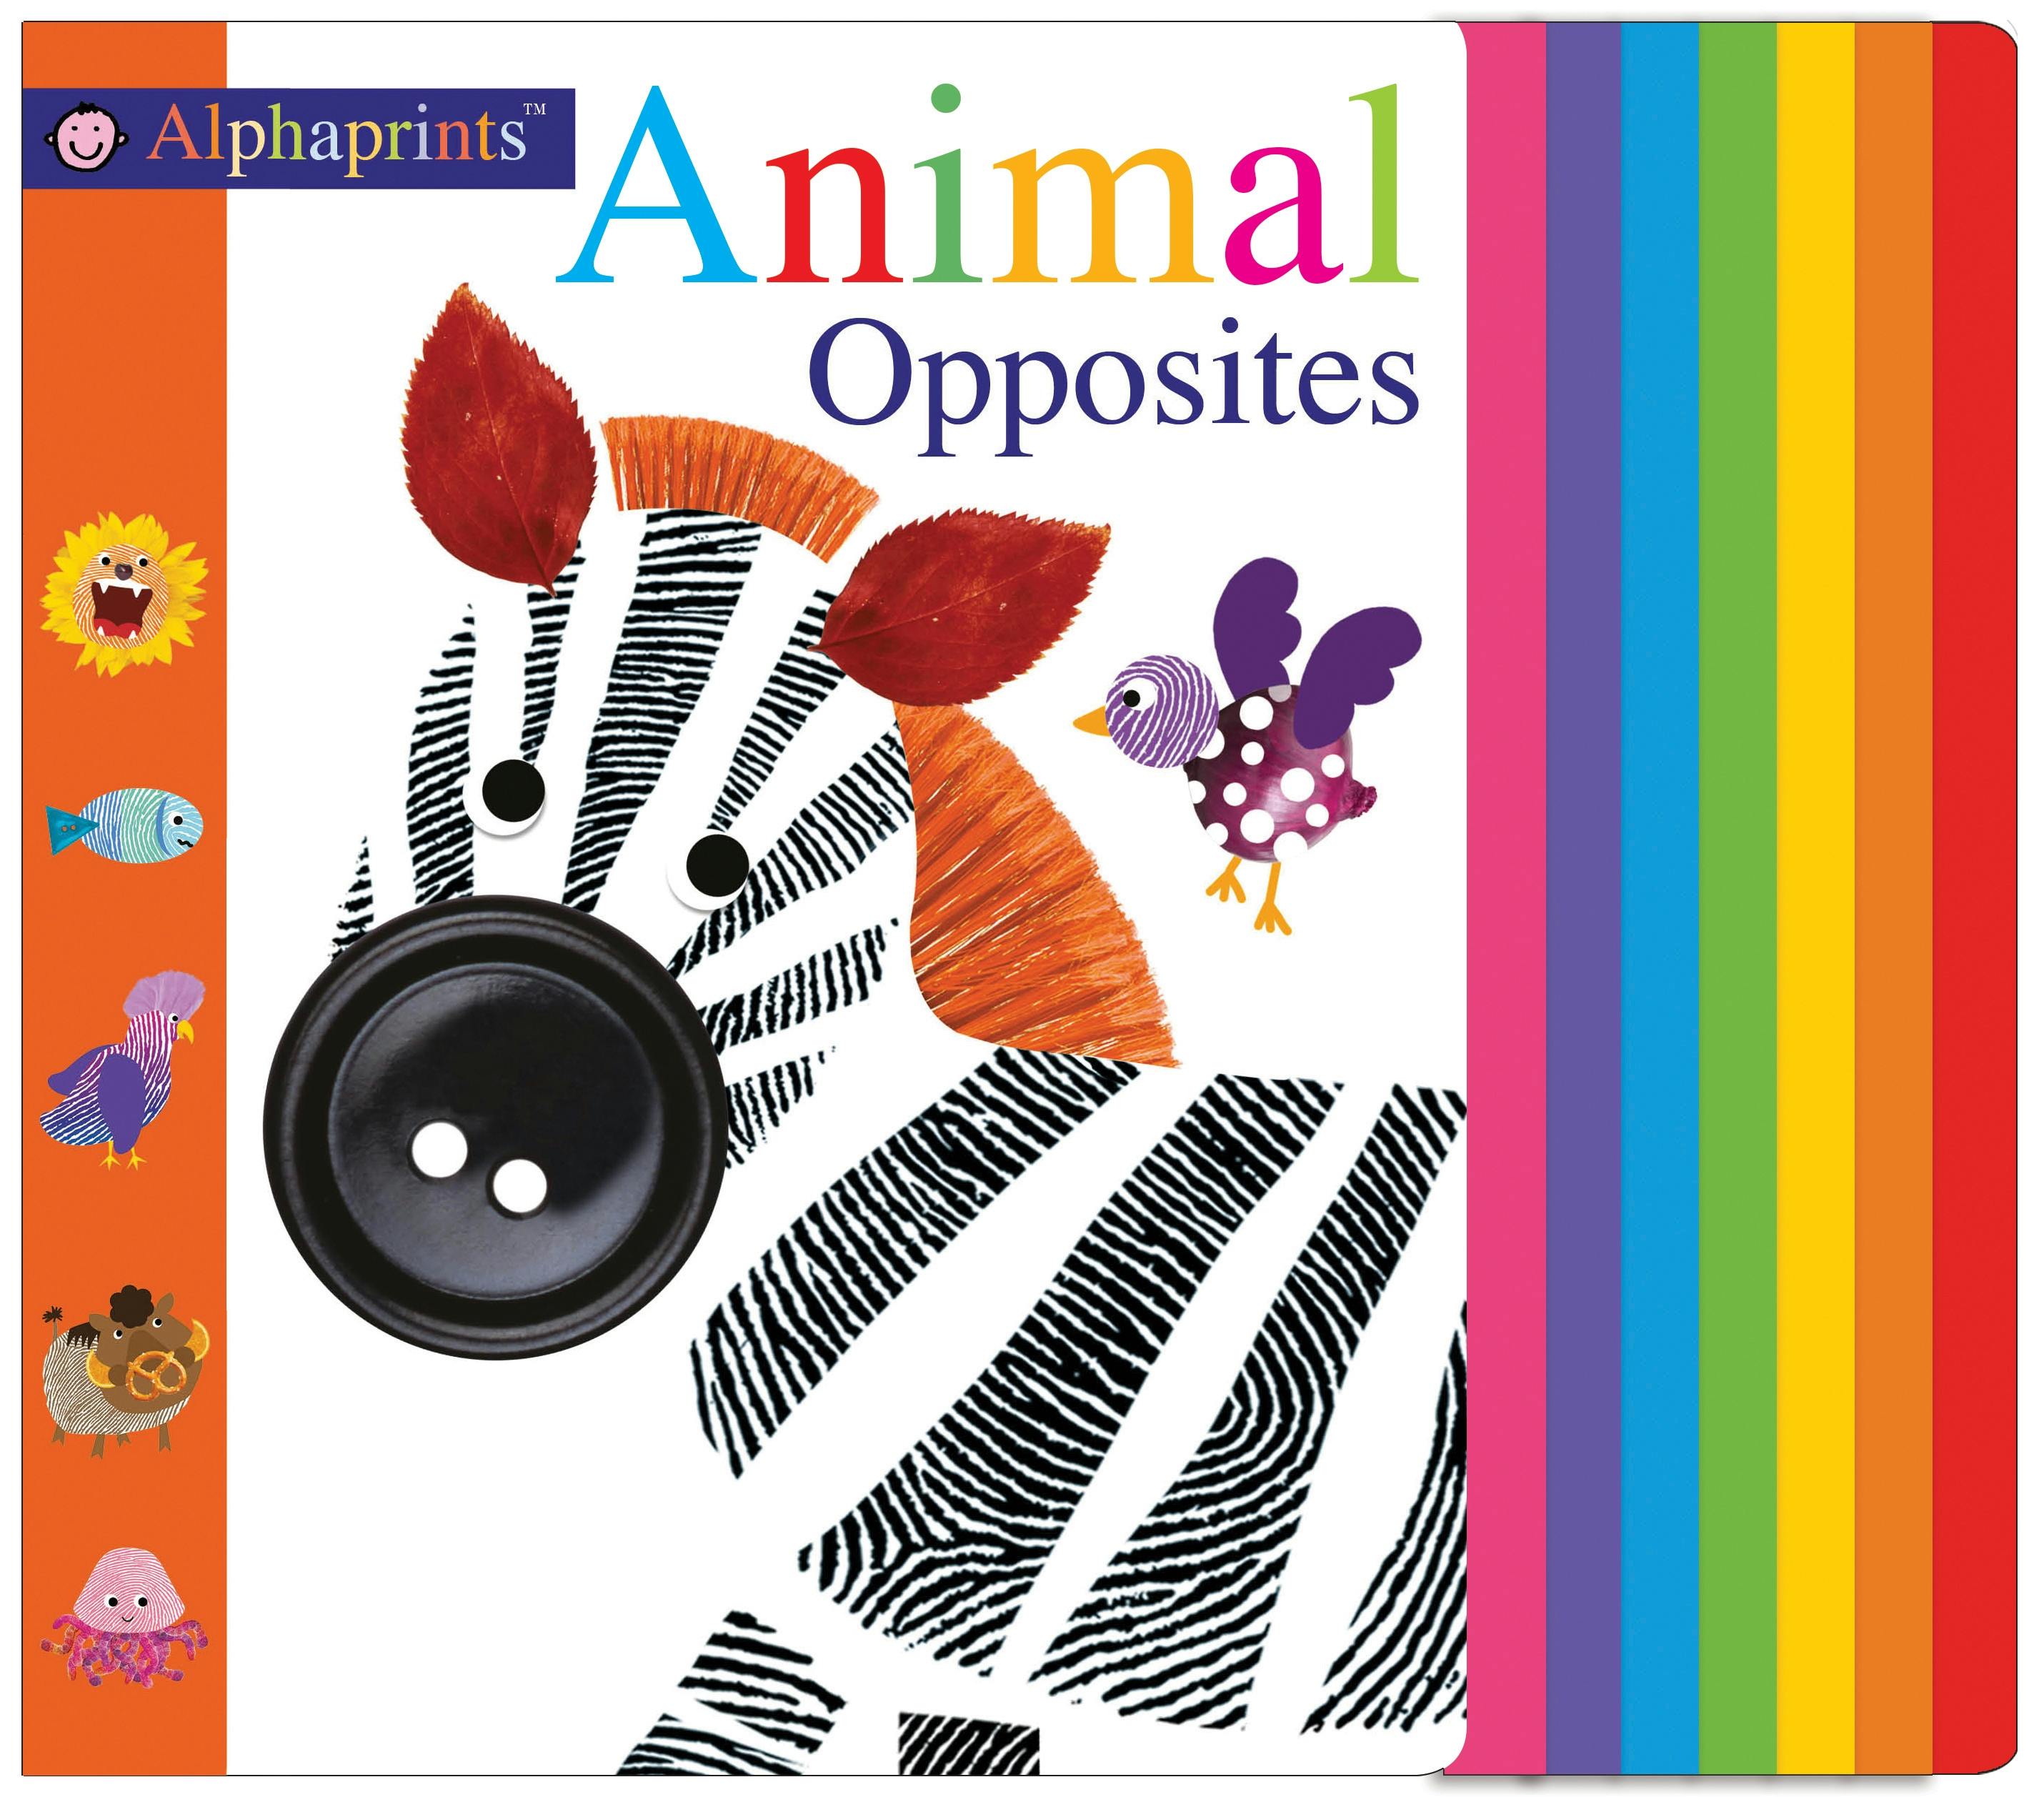 Alphaprints: Animal Opposites